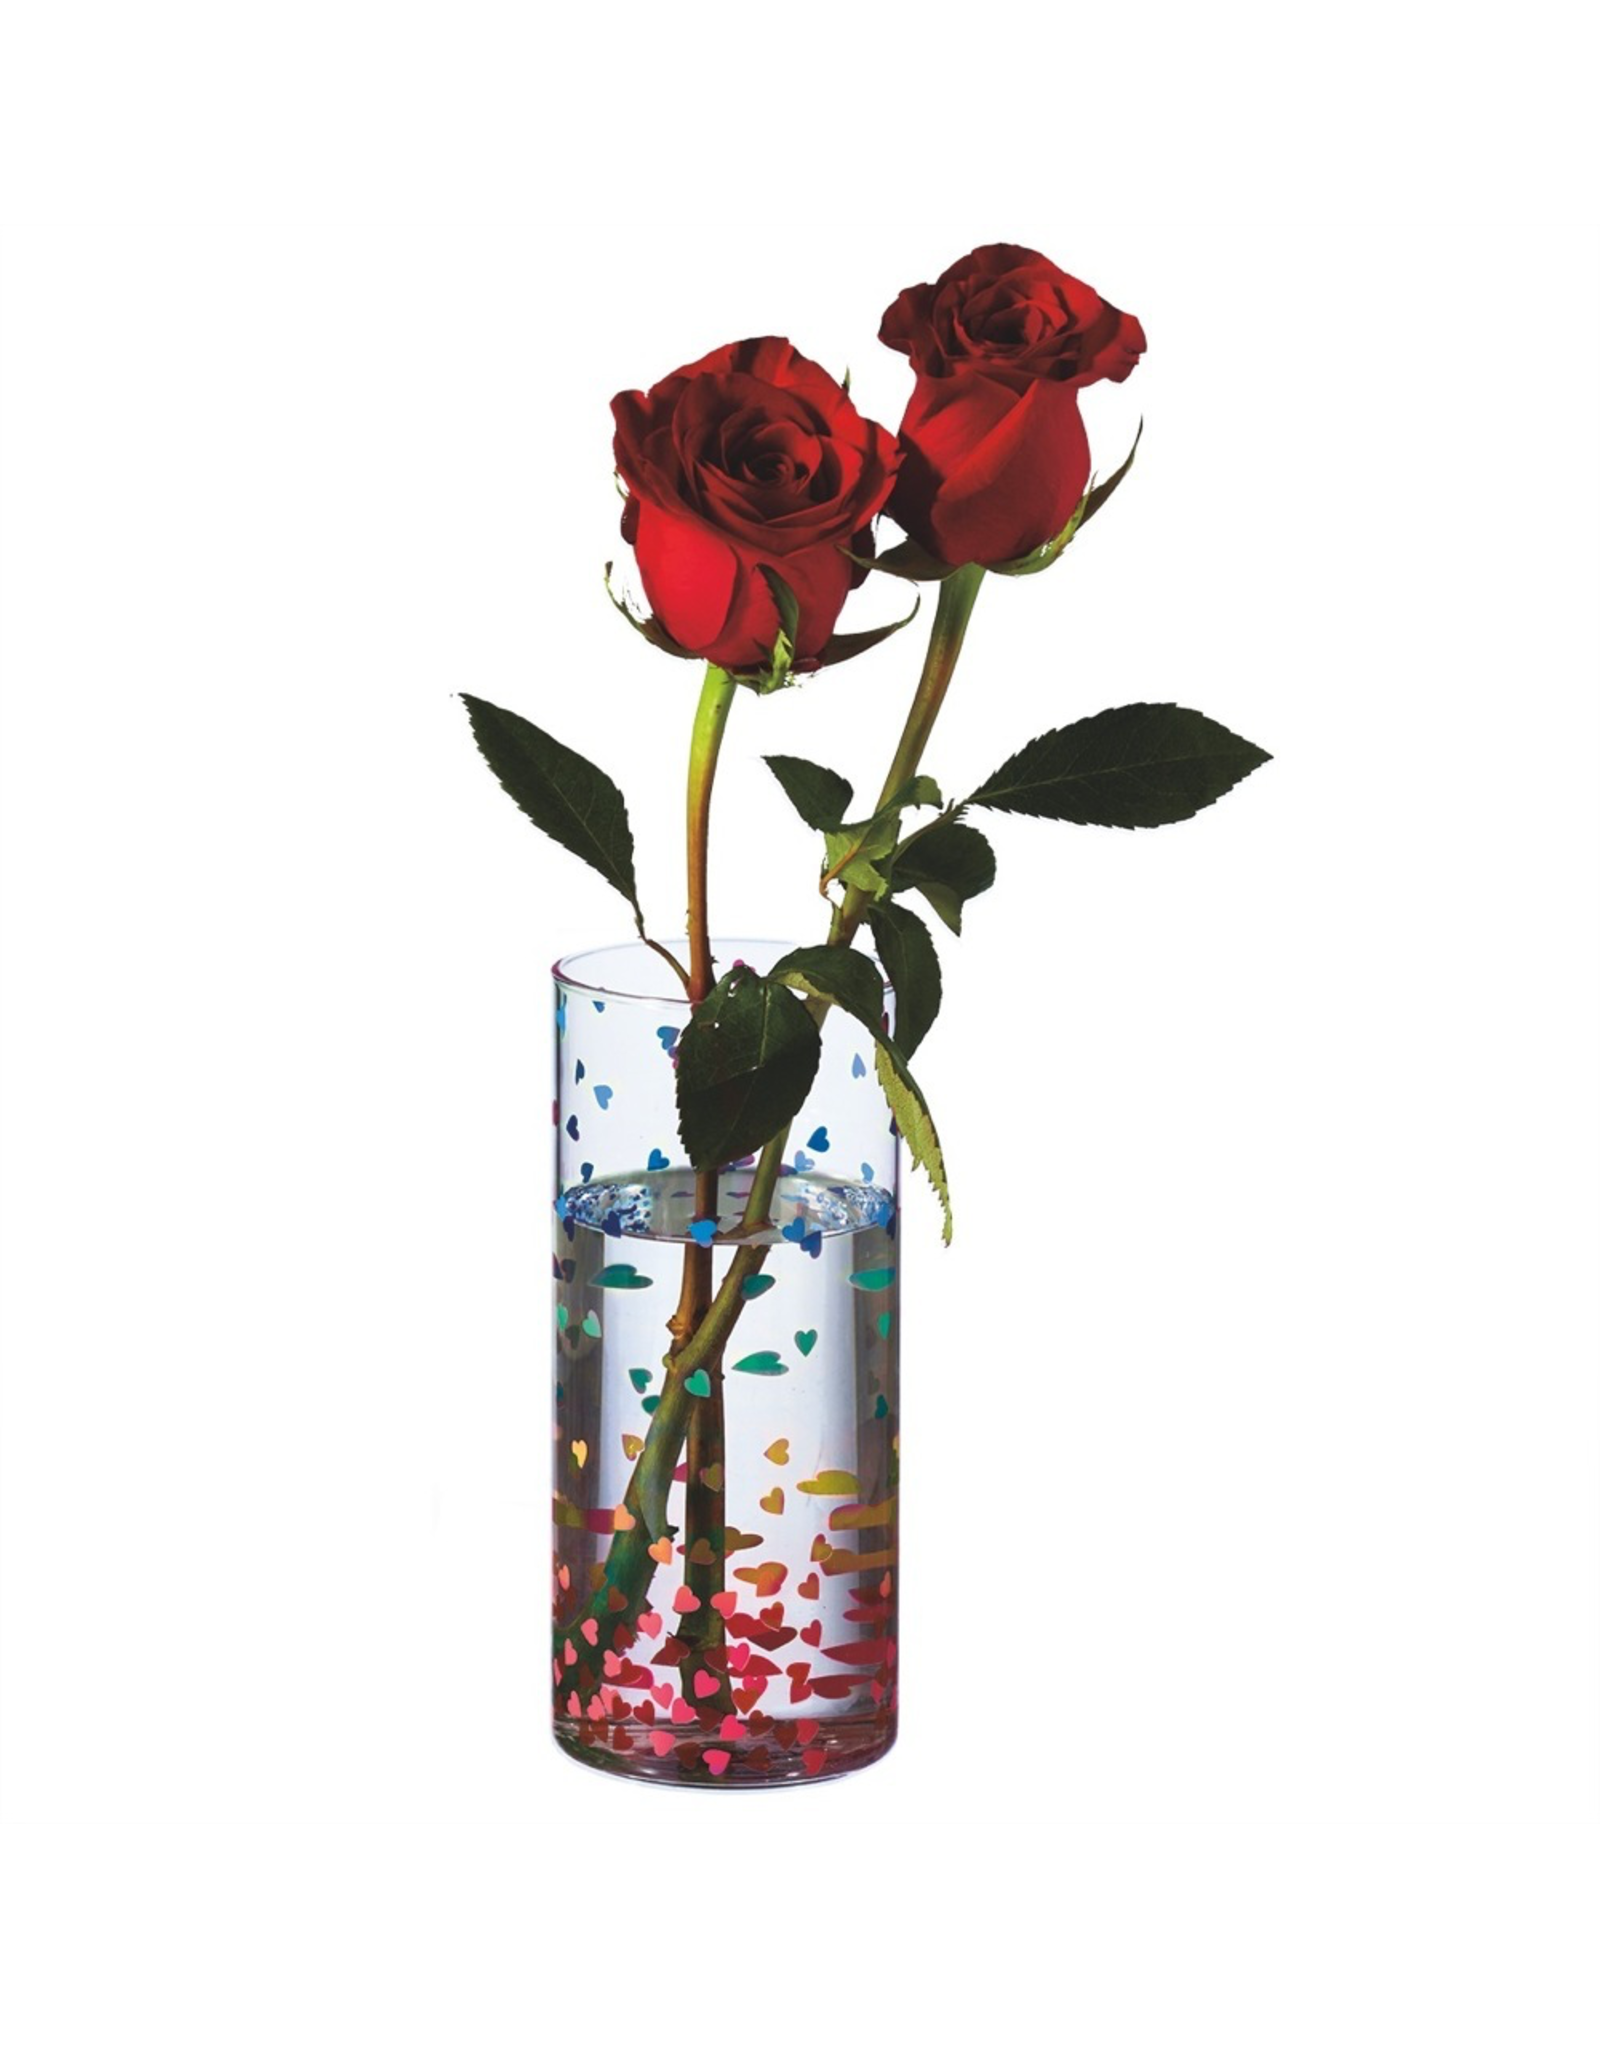 Midwest-CBK Rainbow Confetti Heart Vase 7H Glass Vase w Multi Color Hearts